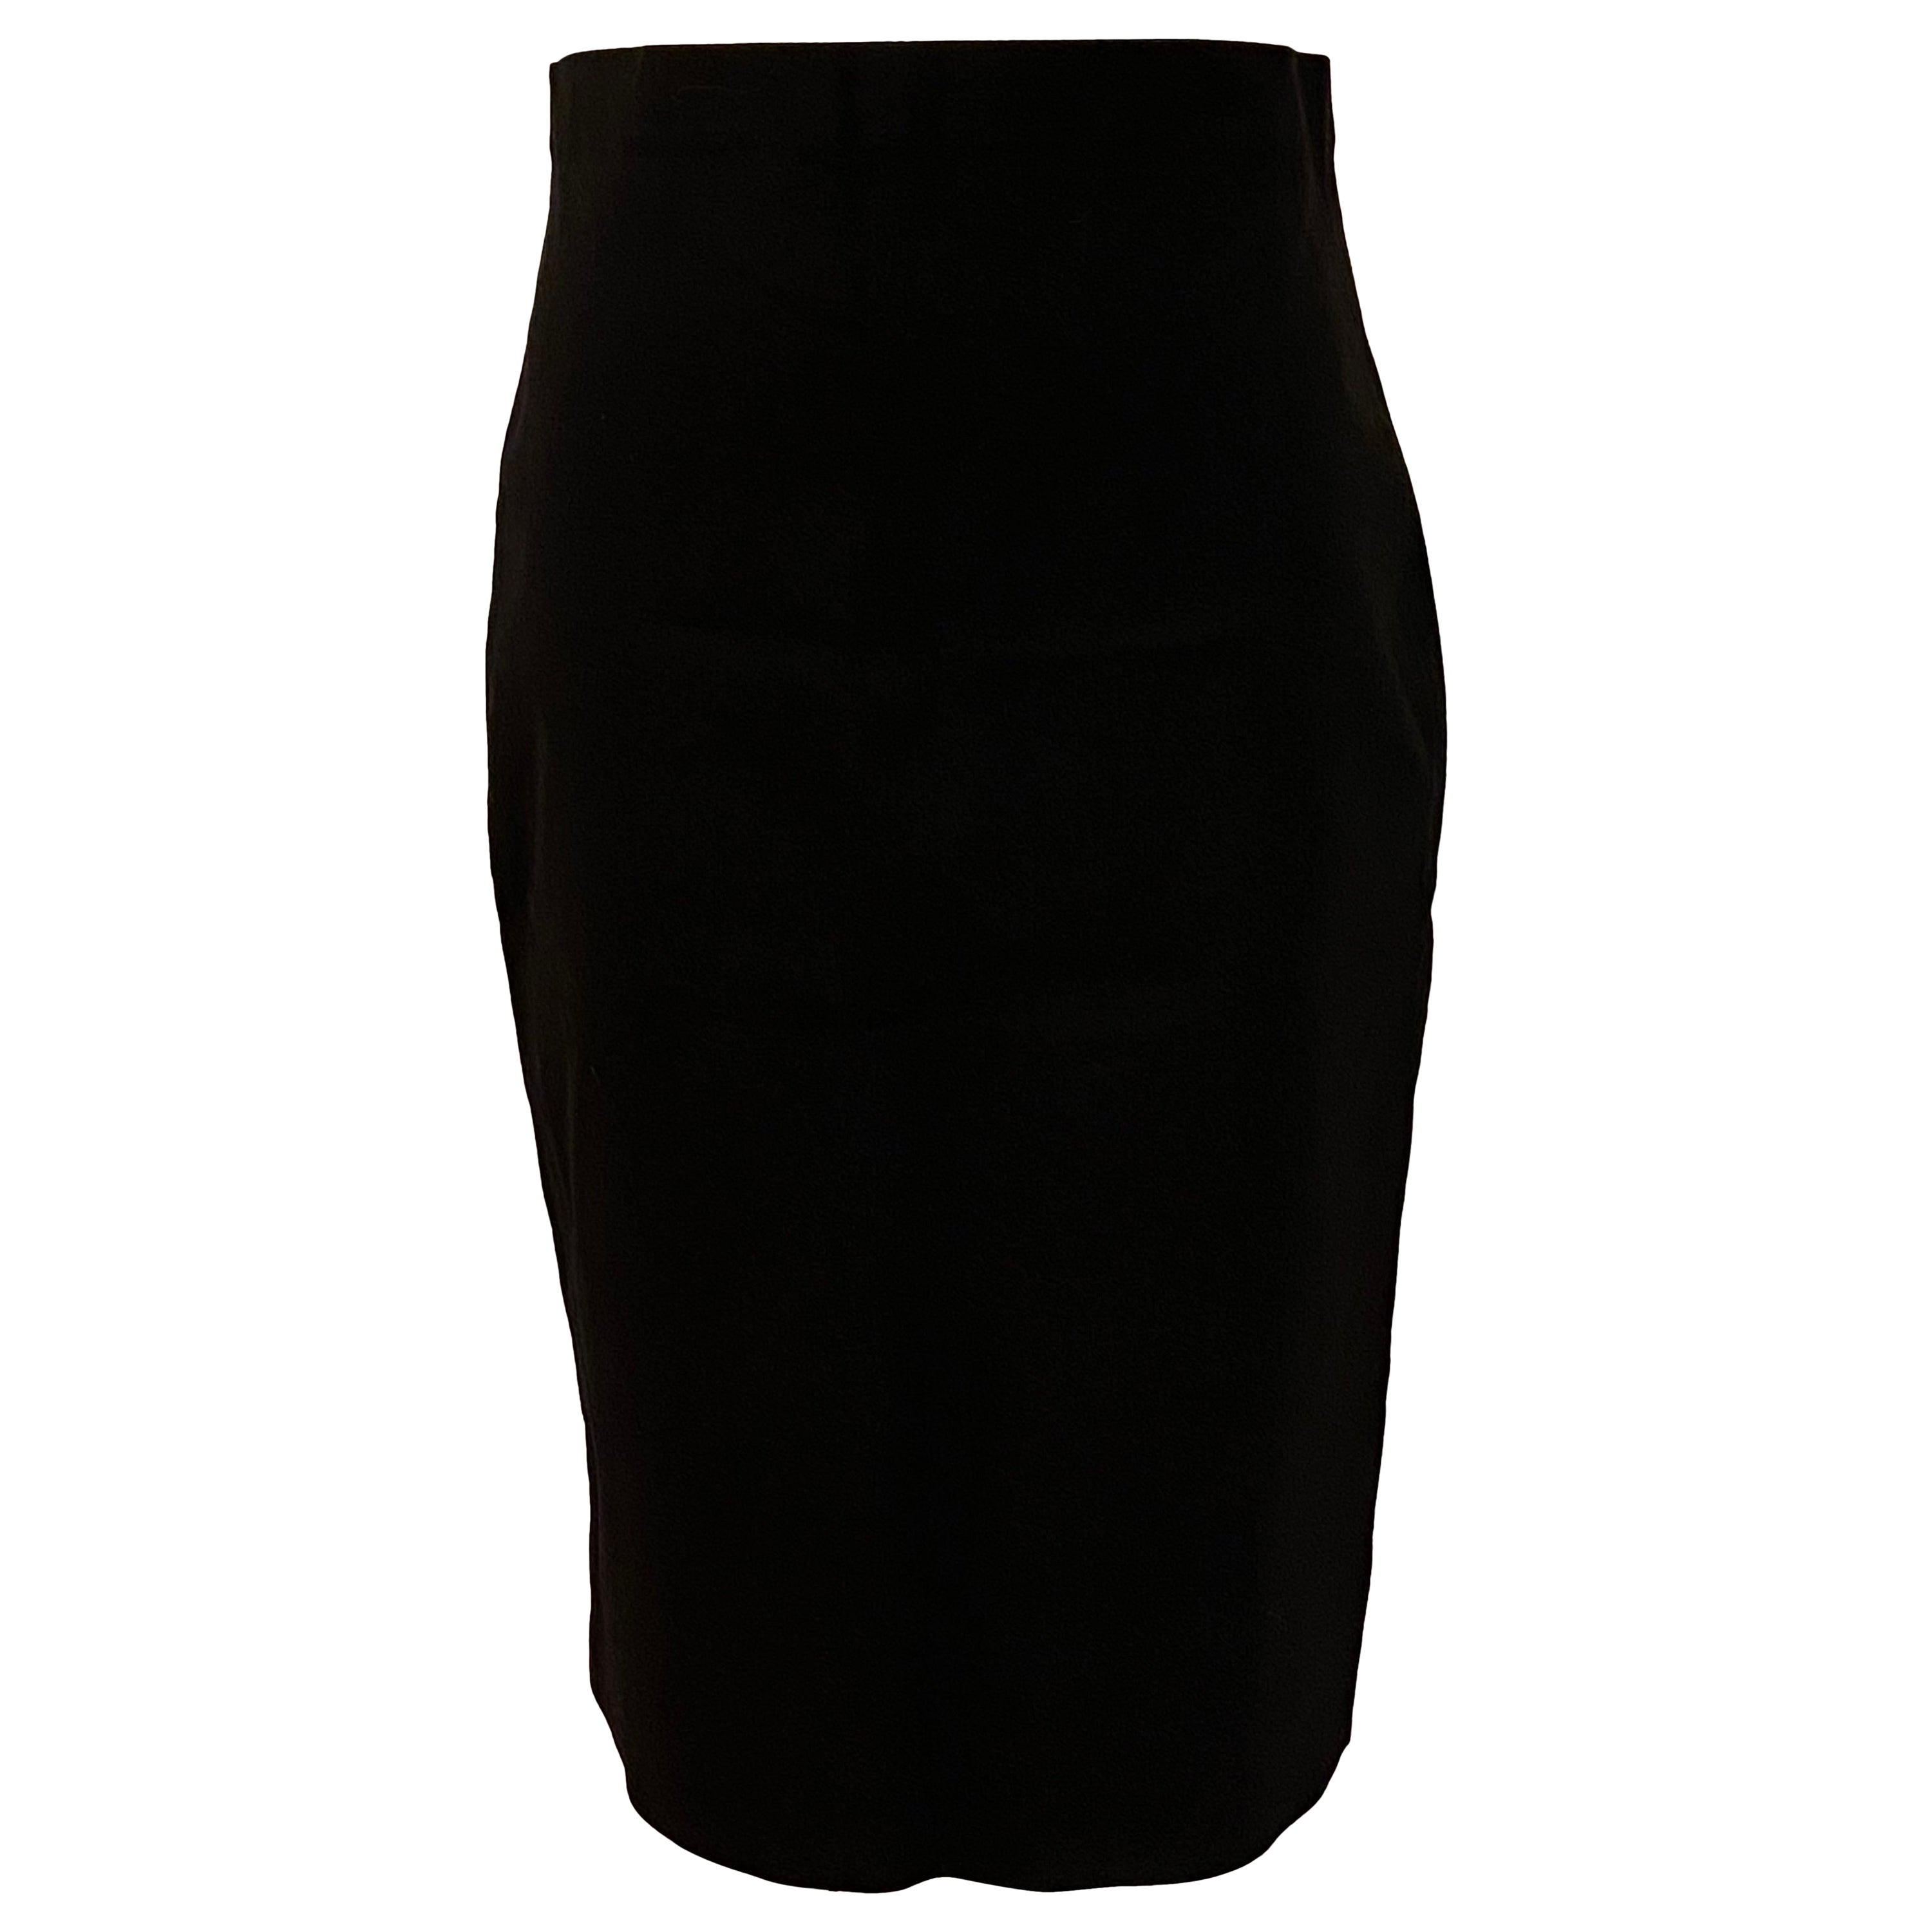 Nicol Caramel Wonderfully Rich Medium-Weight Black Spandex-Blend Pencil Skirt For Sale